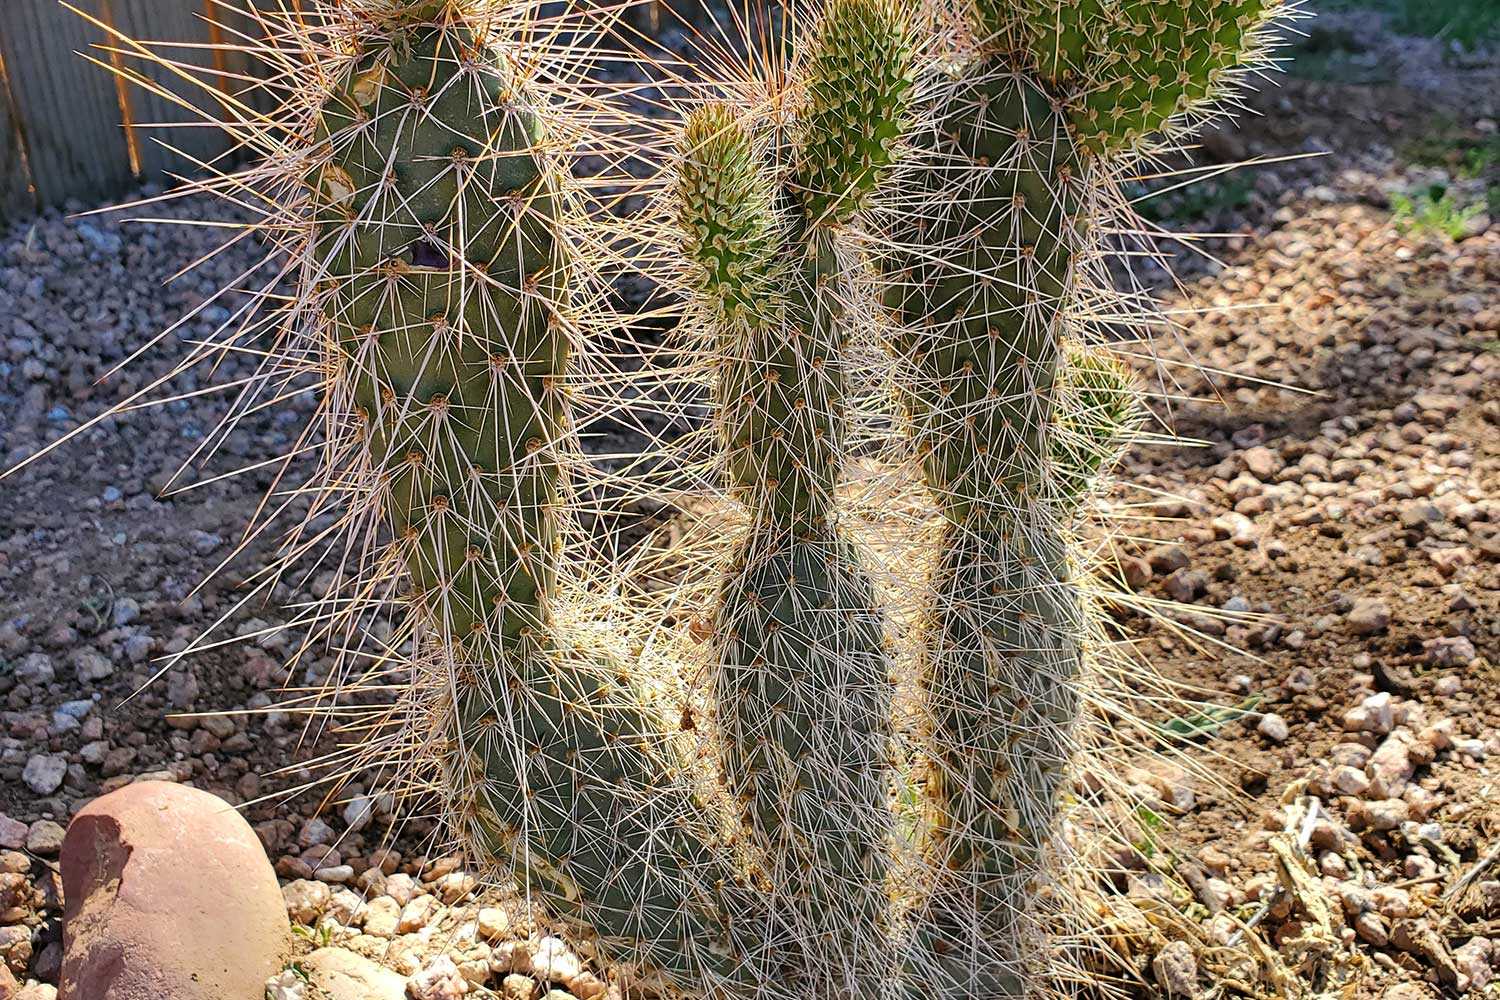 PlantPop Film: “Jen Urso: Cactus Mapping”